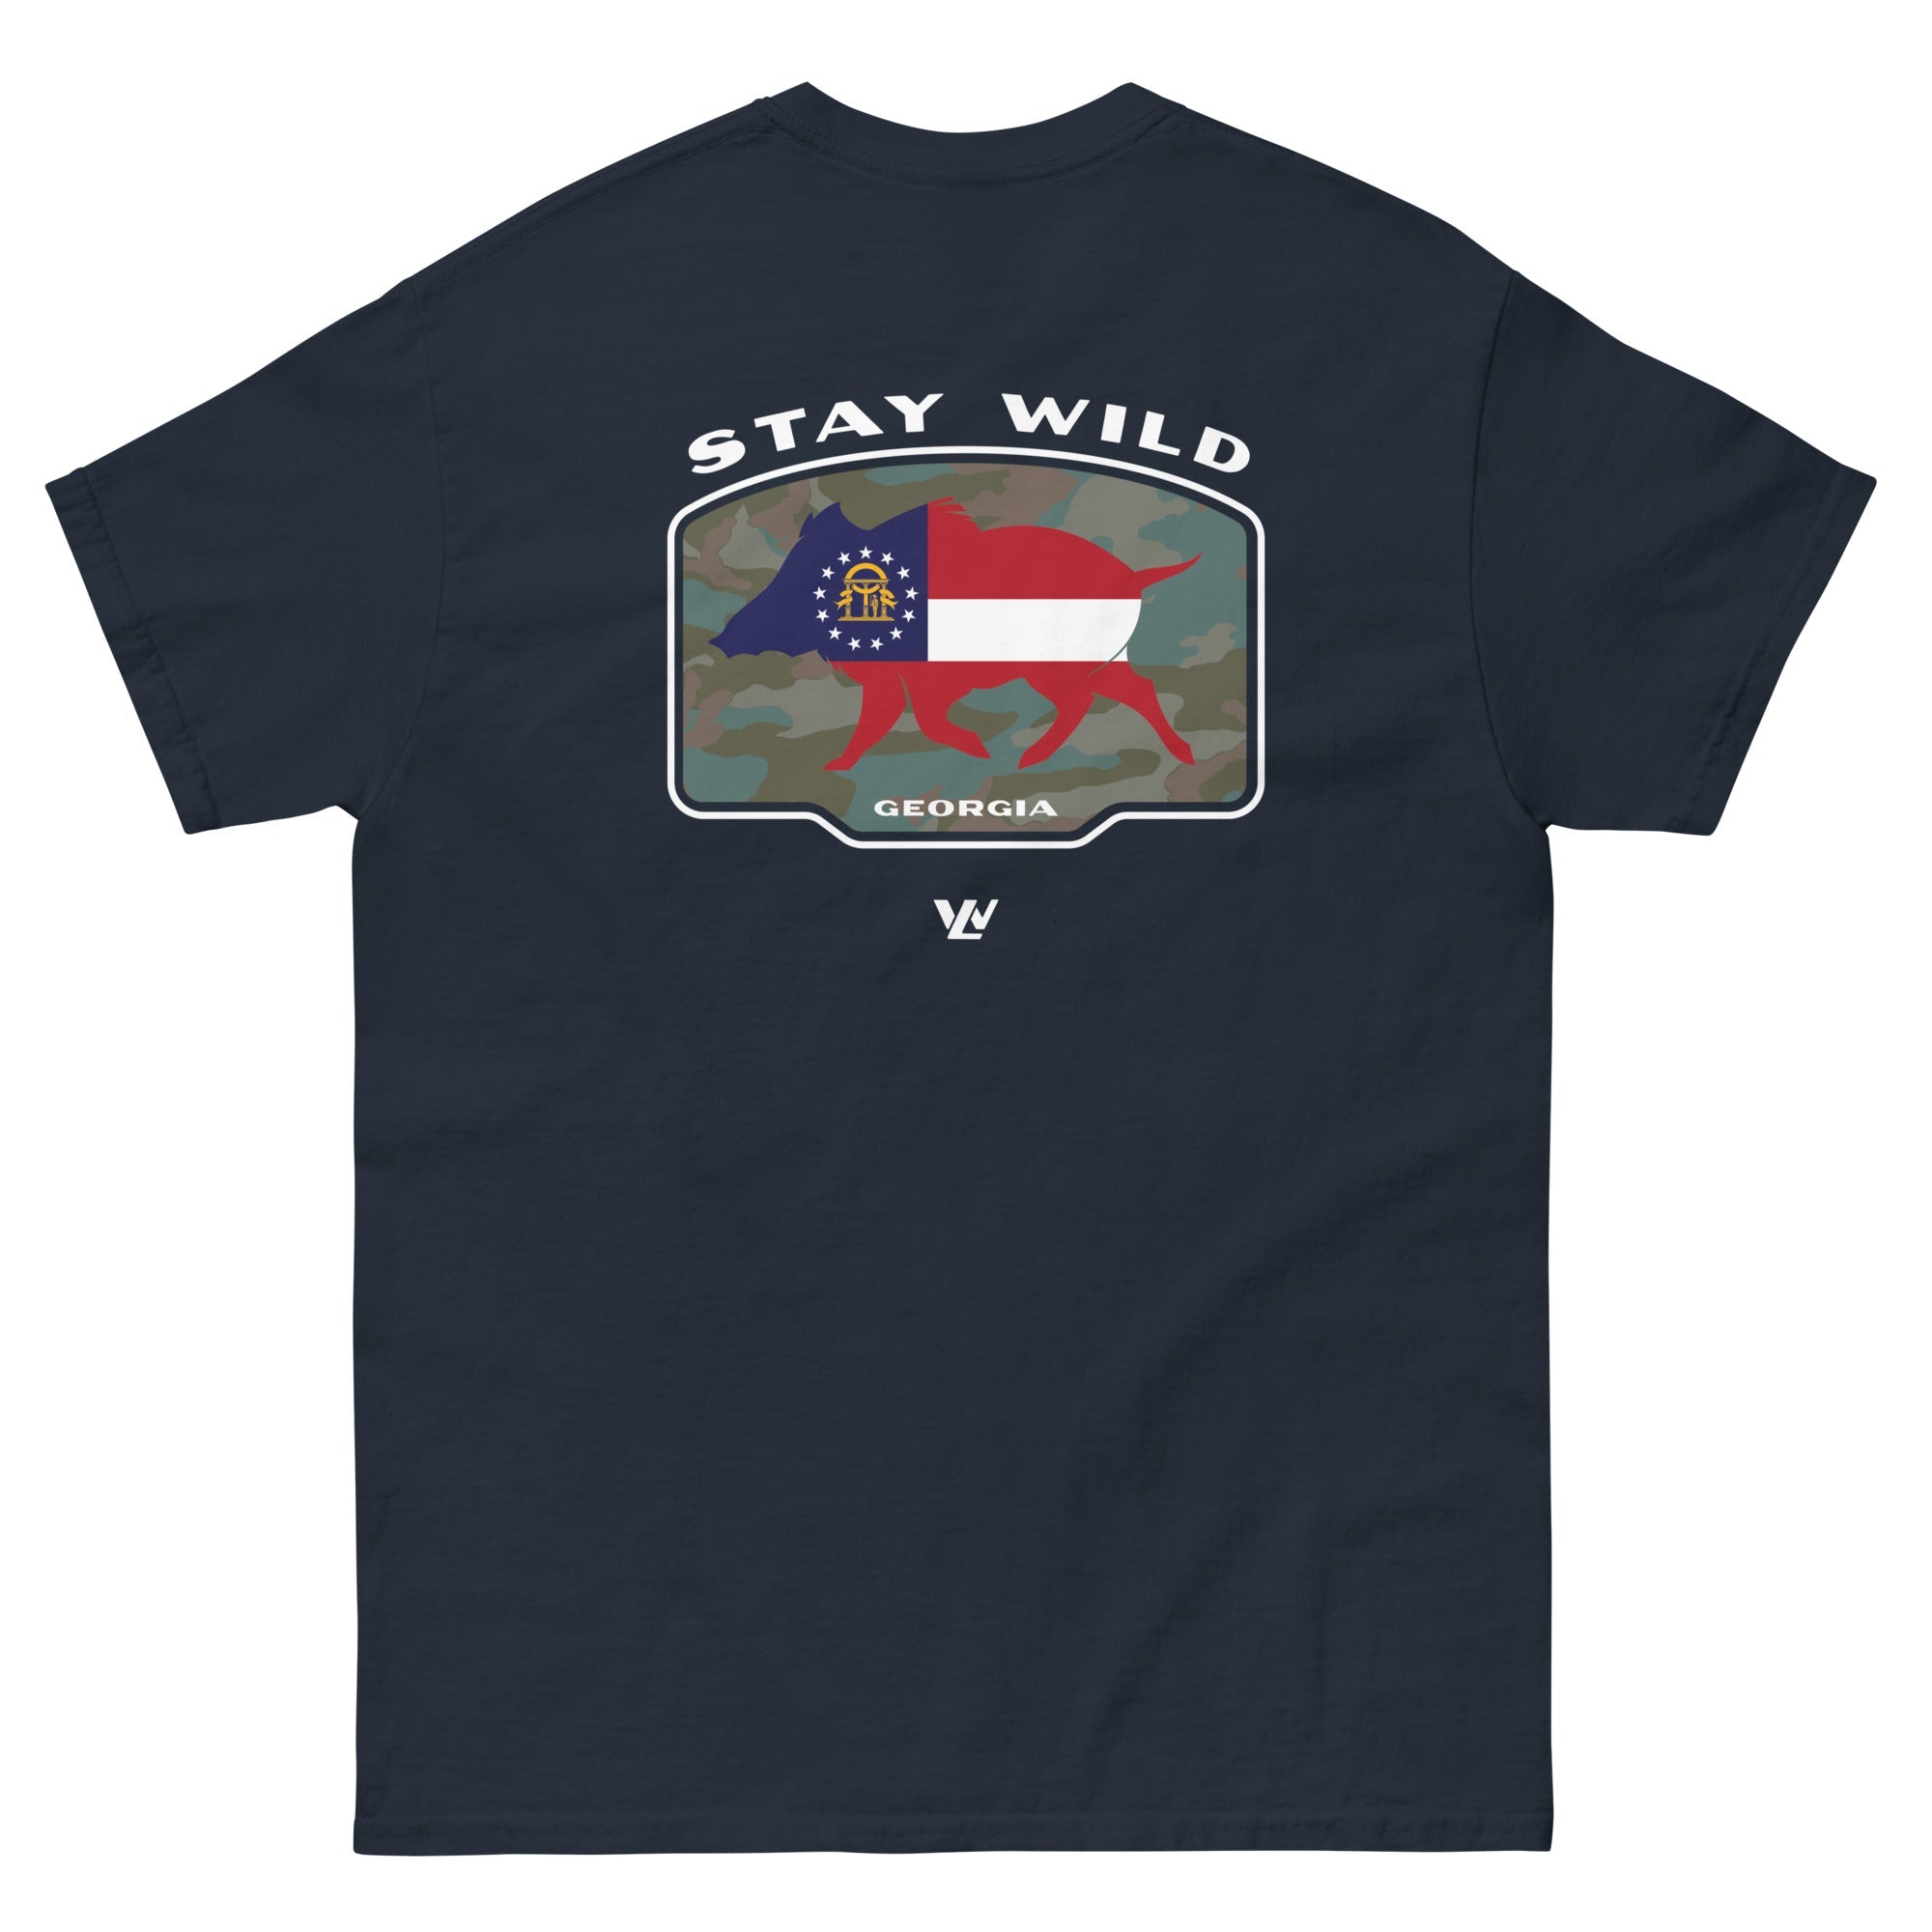 Stay Wild Georgia T-Shirt - Wilding Life